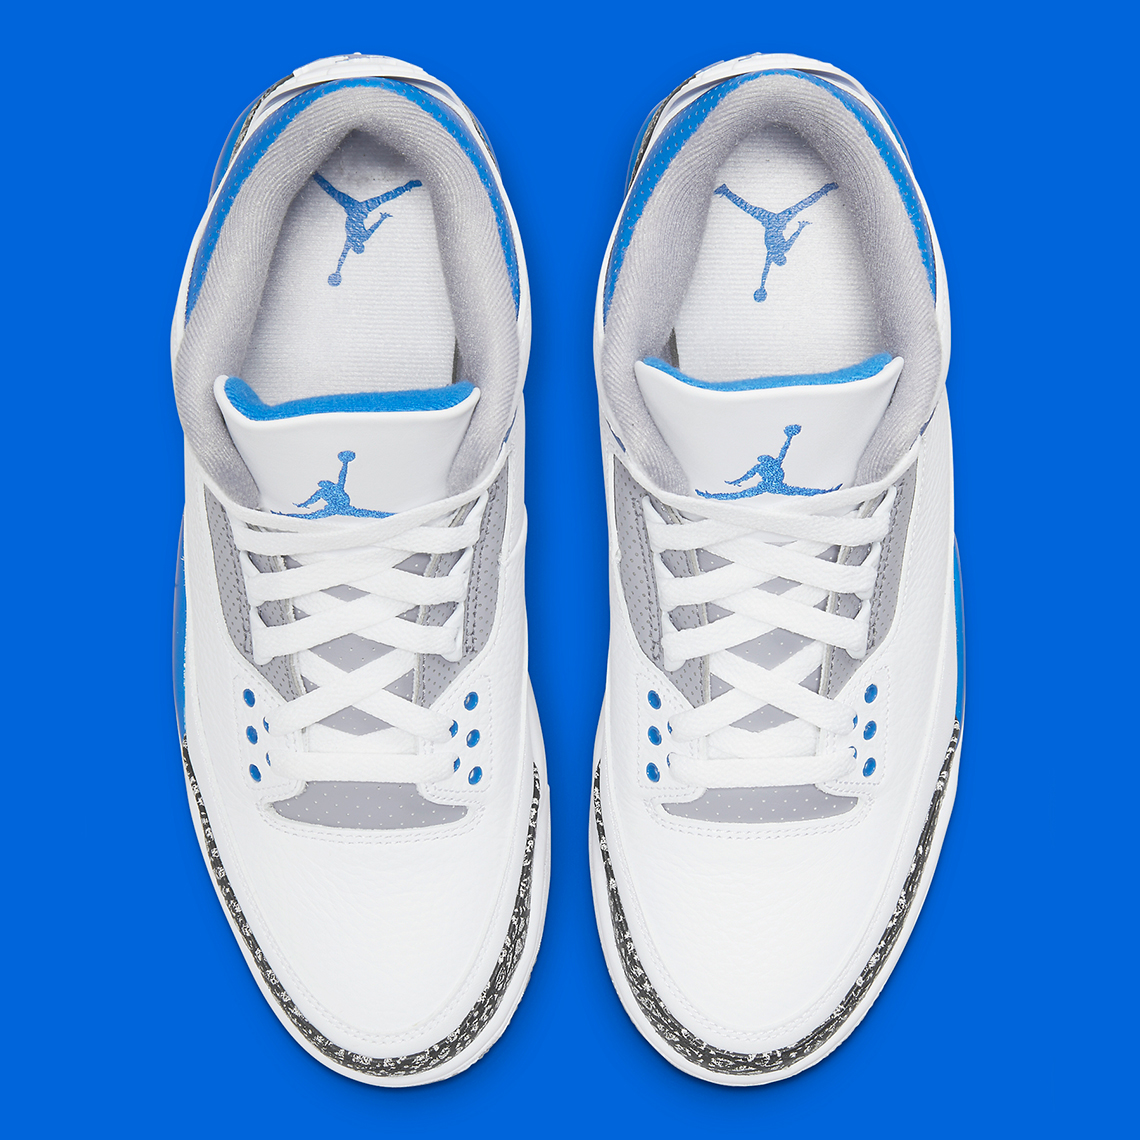 Air NikeLabs Jordan 3 Racer Blue Ct8532 145 Release Date 3